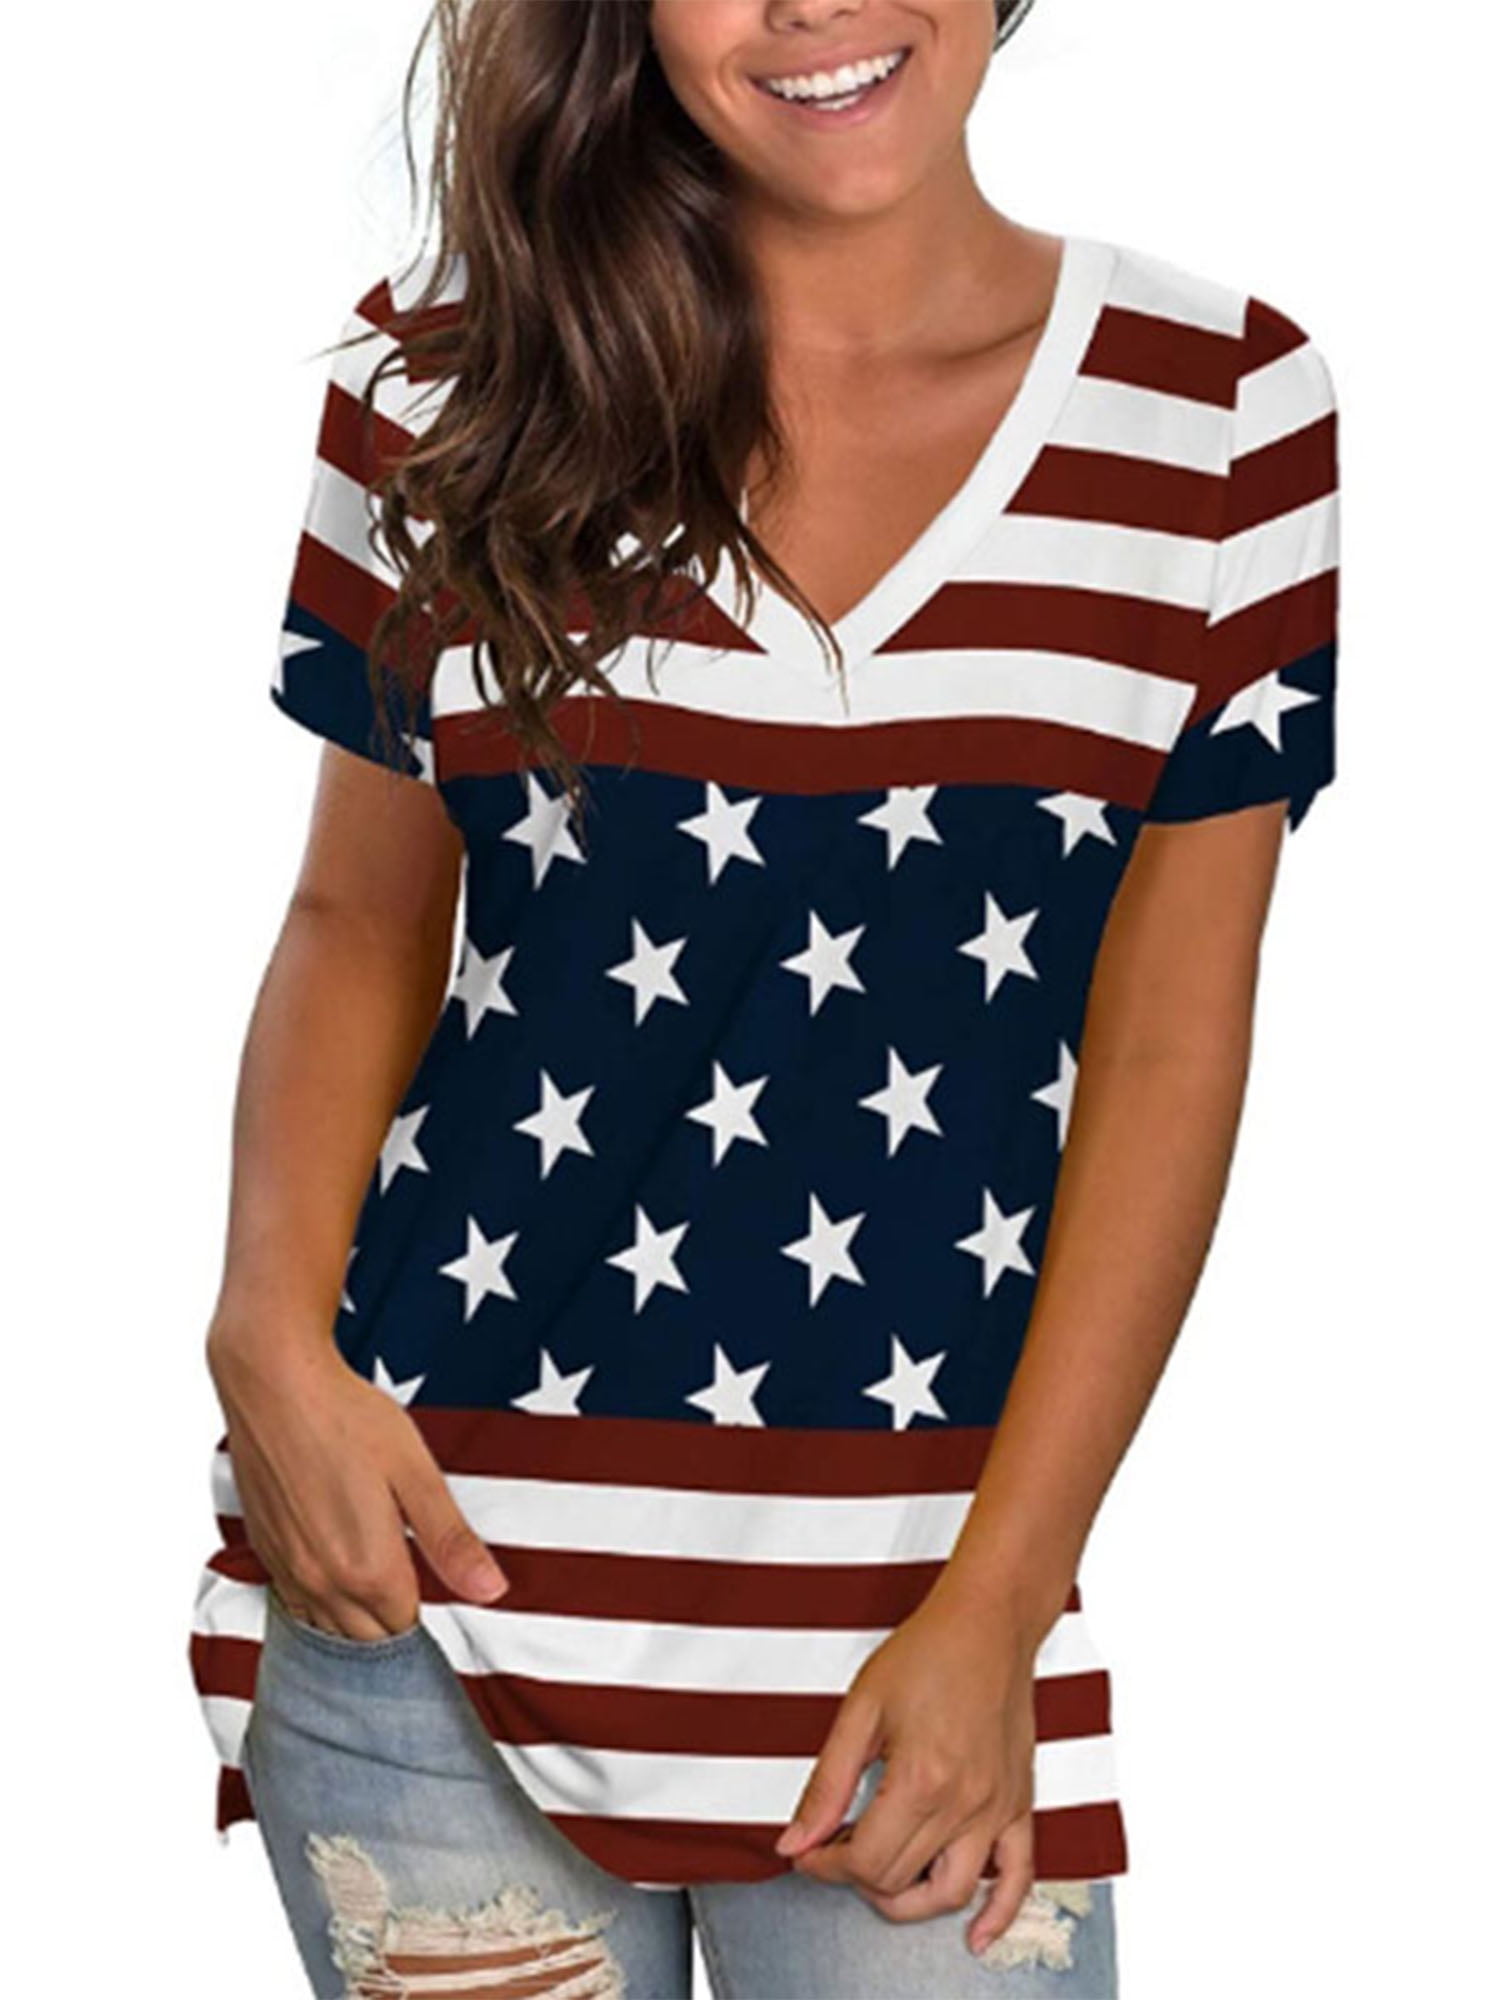 CUCUHAM Women Summer American Flag Printing Shirt Short Sleeve Casual Tops Blouse